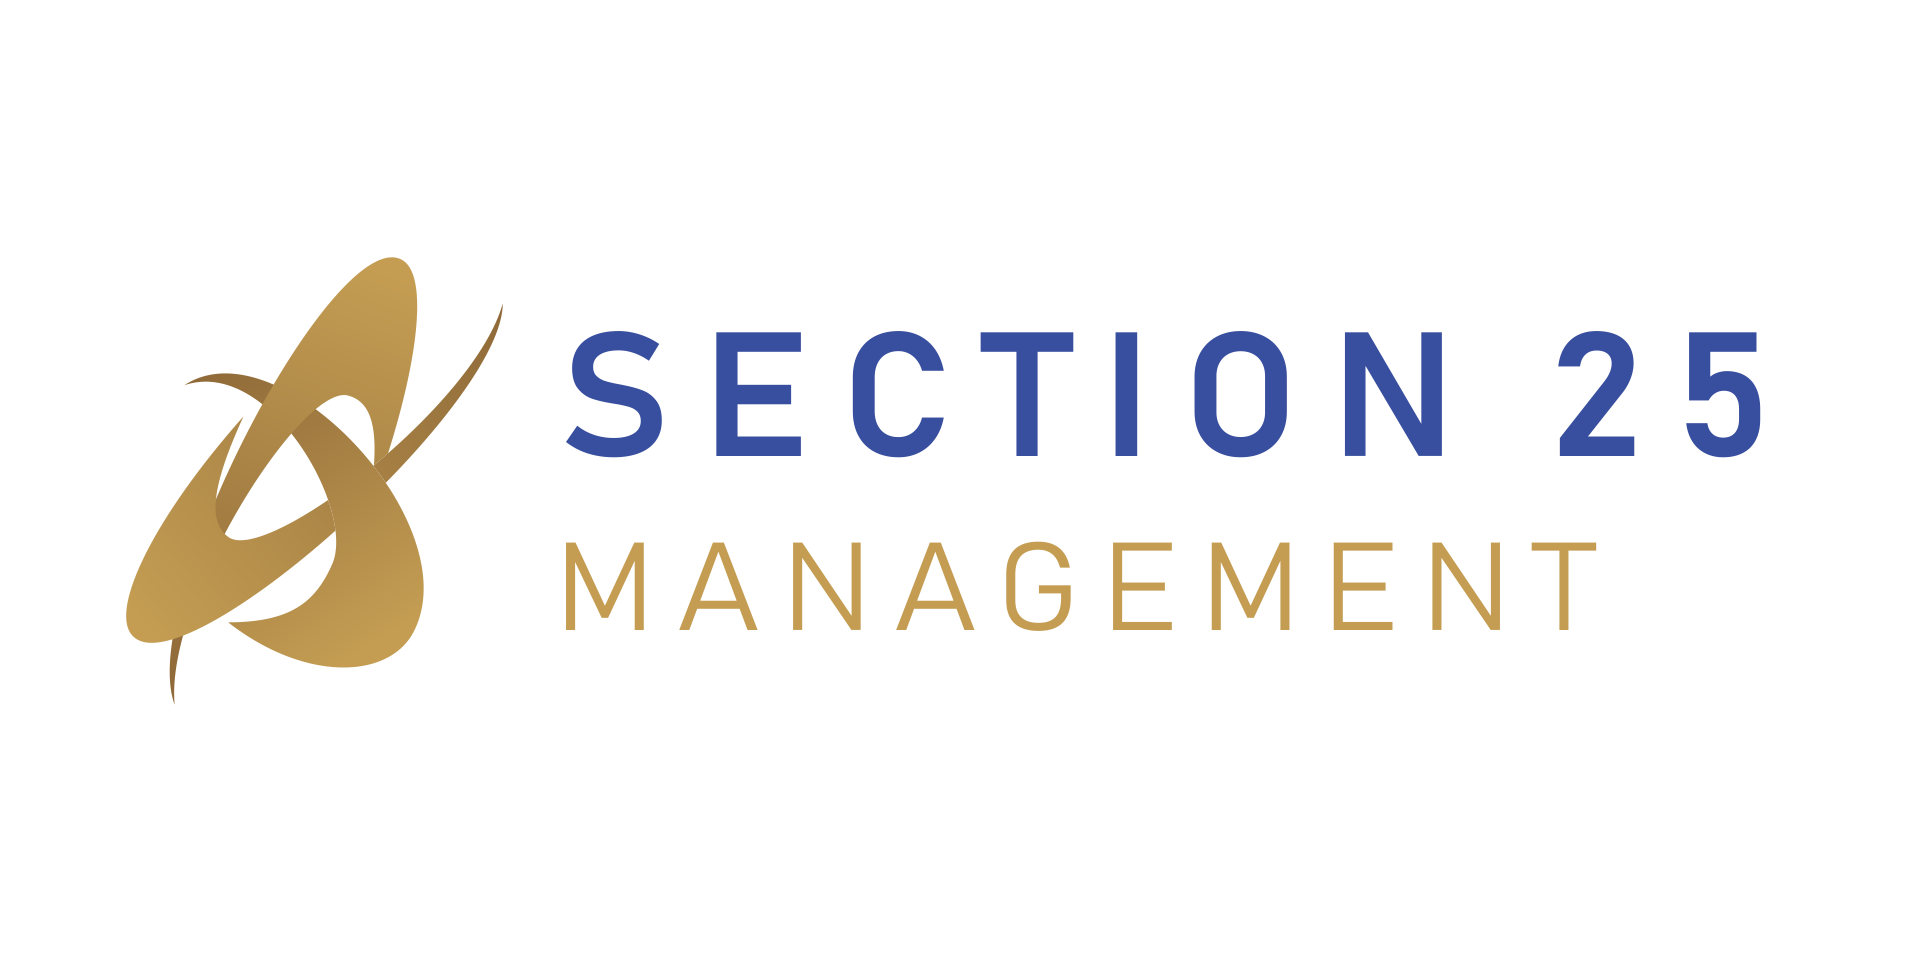 Section 25 Management